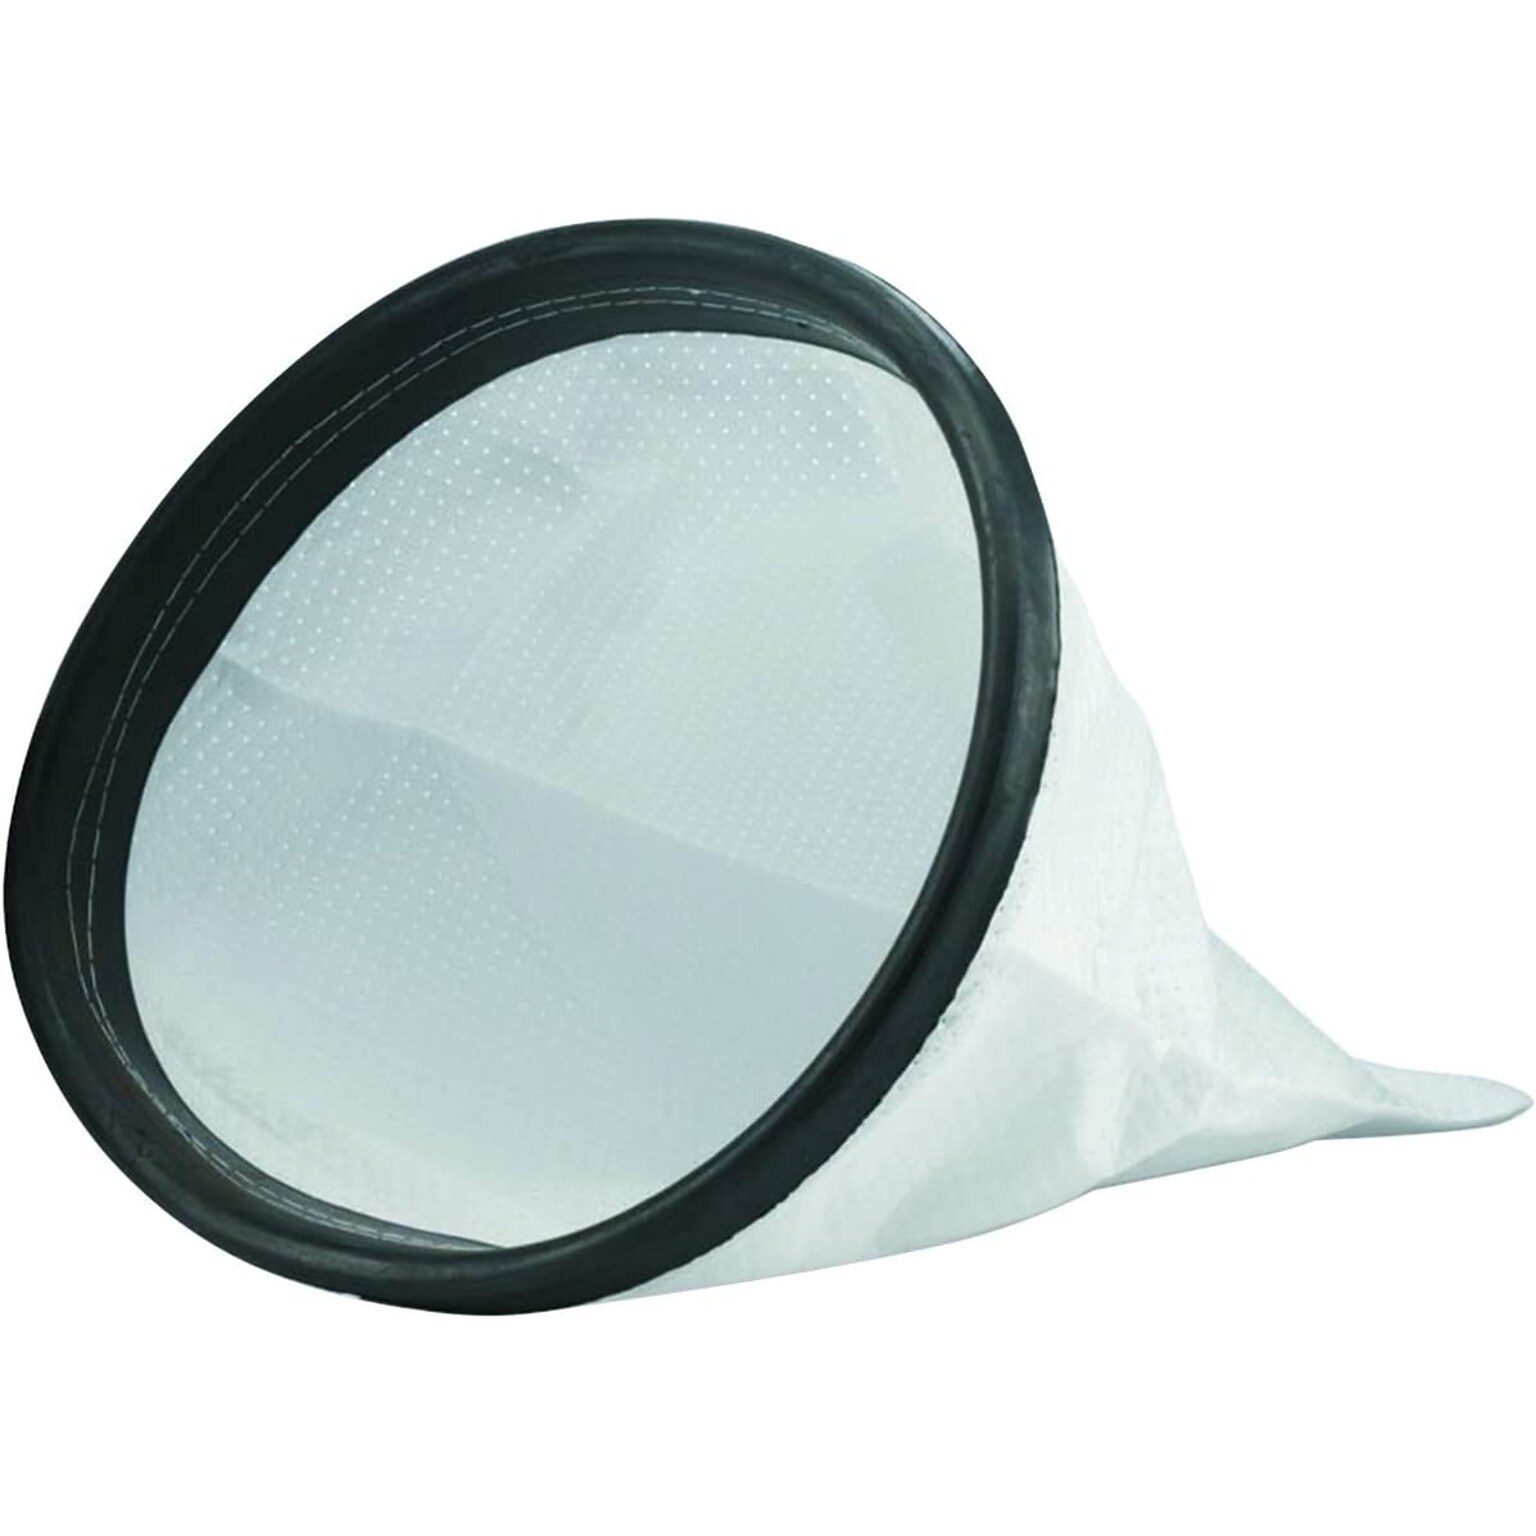 Hoover Vac Pro Vacuum Dust Bag with Rubber Ring, White/Black (2KE2105000)